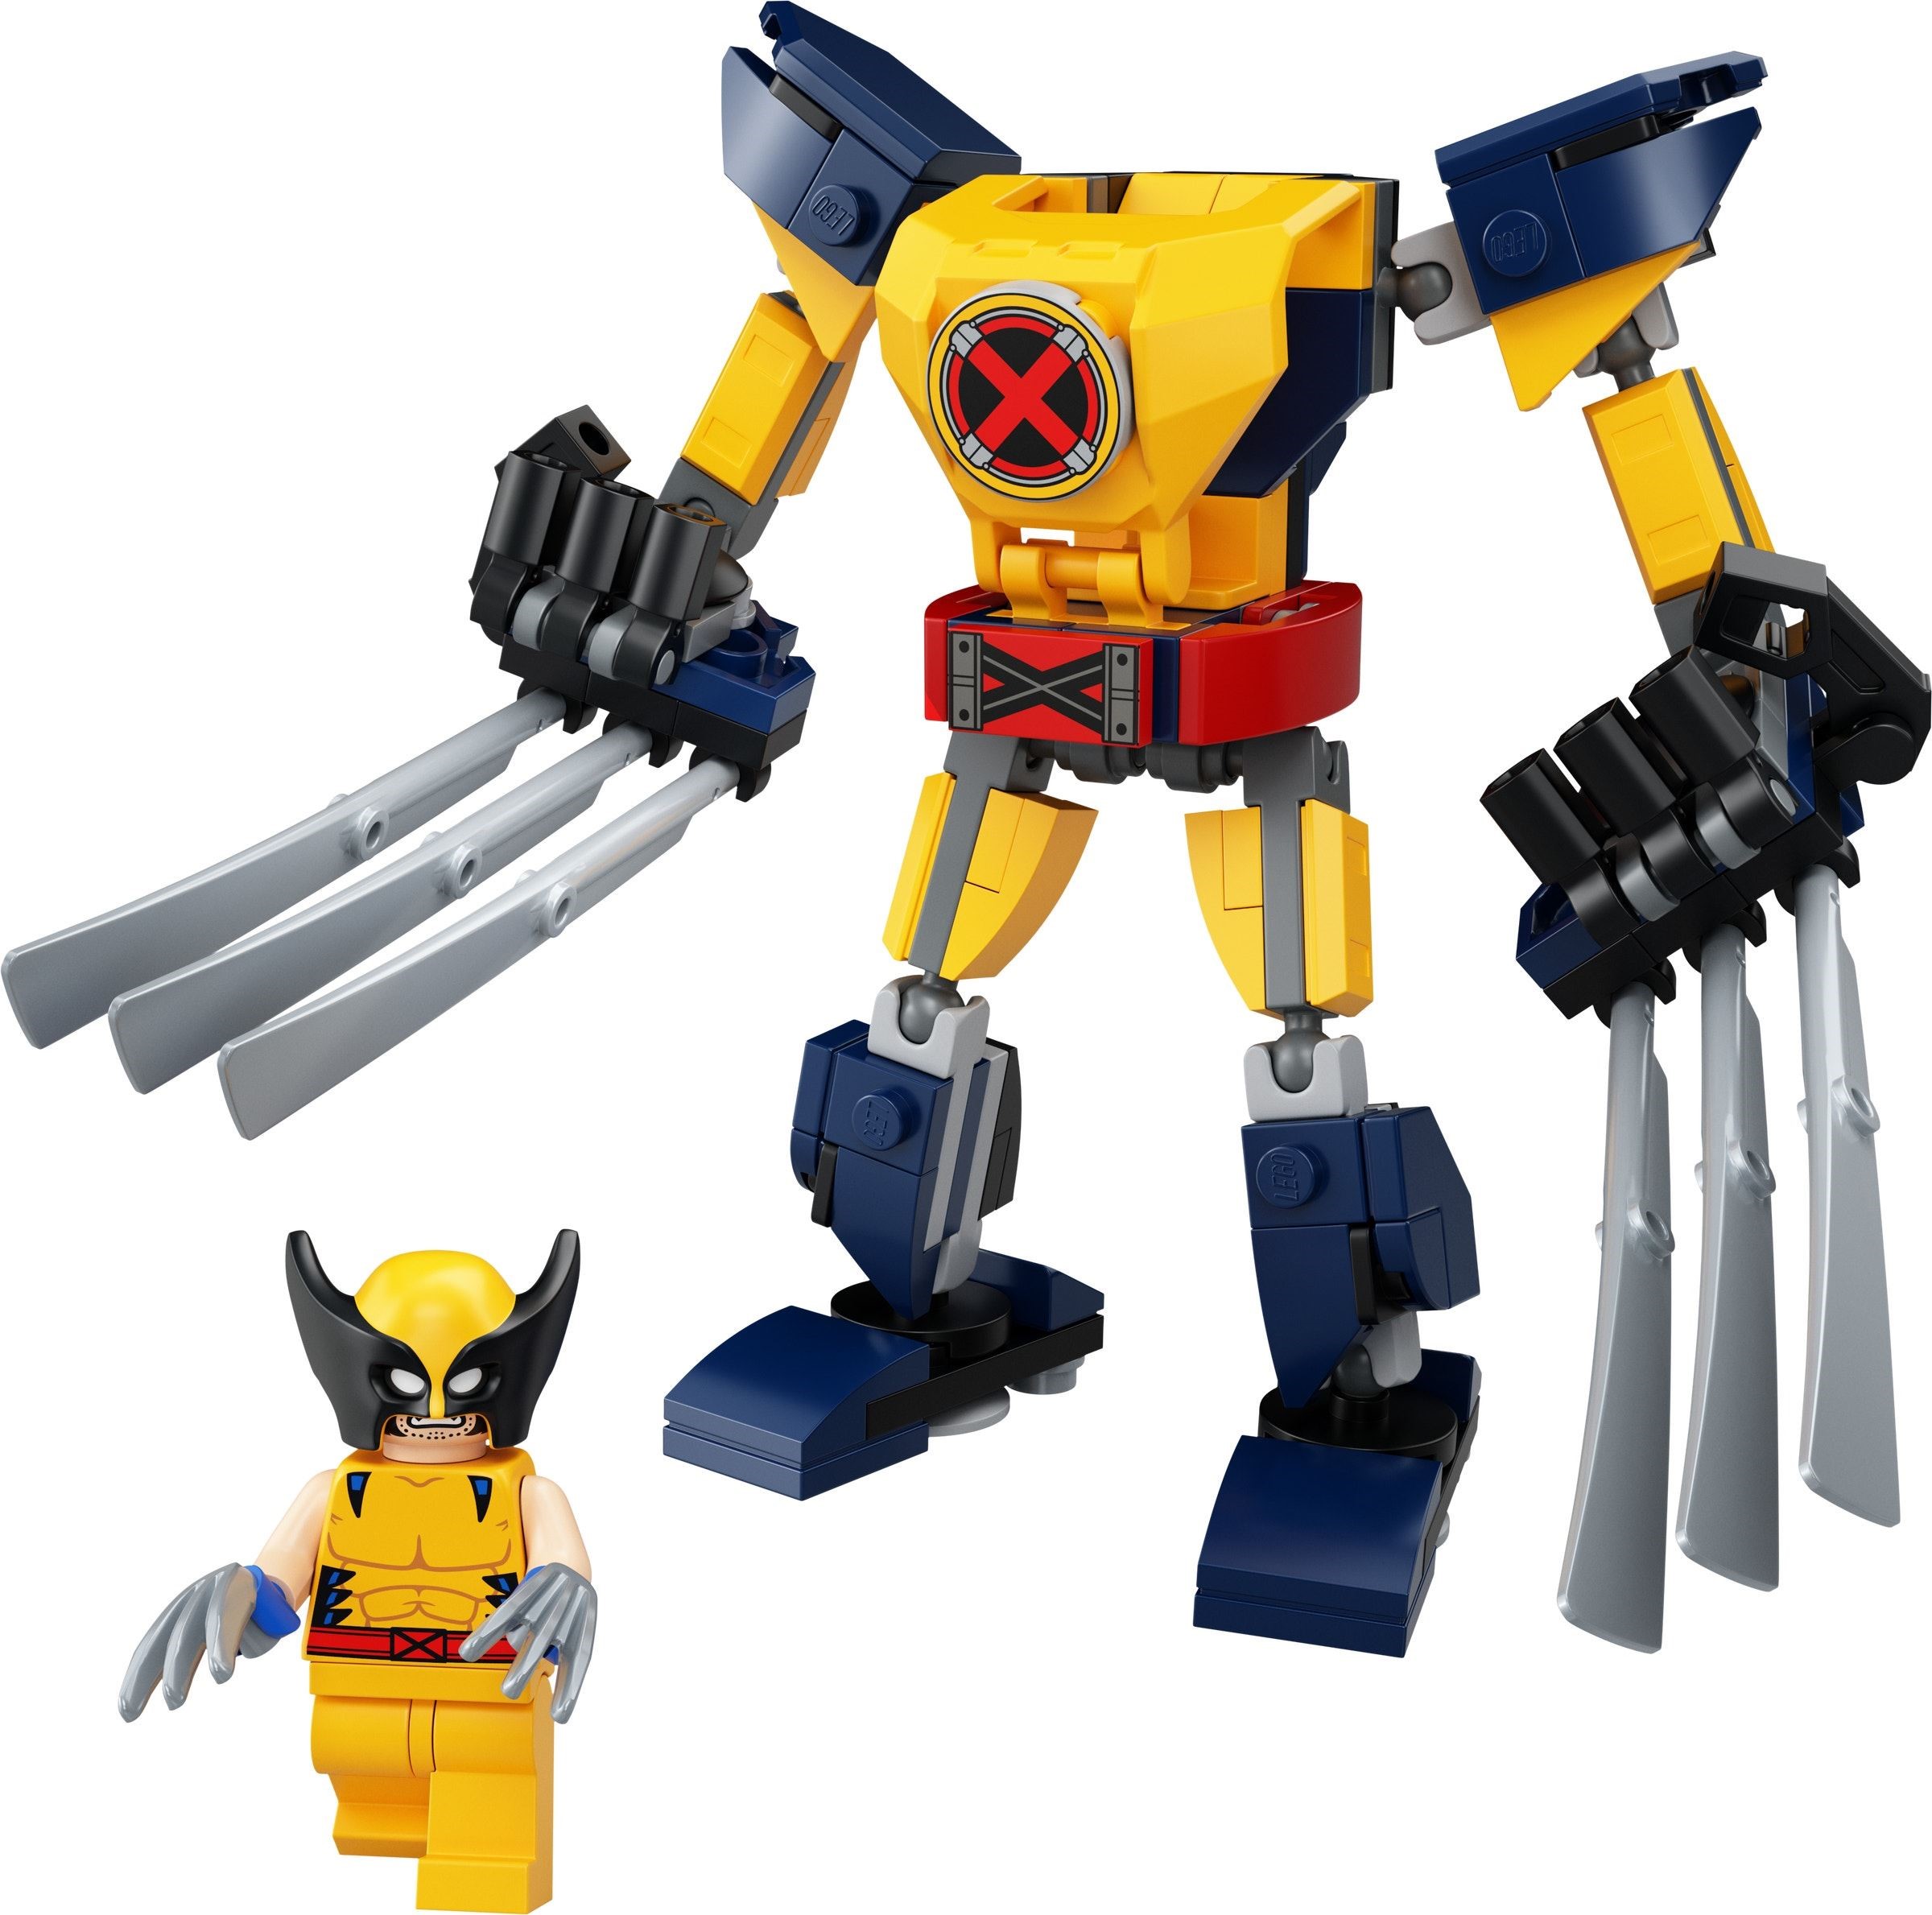 LEGO® Marvel 76202 - Wolverine Mech